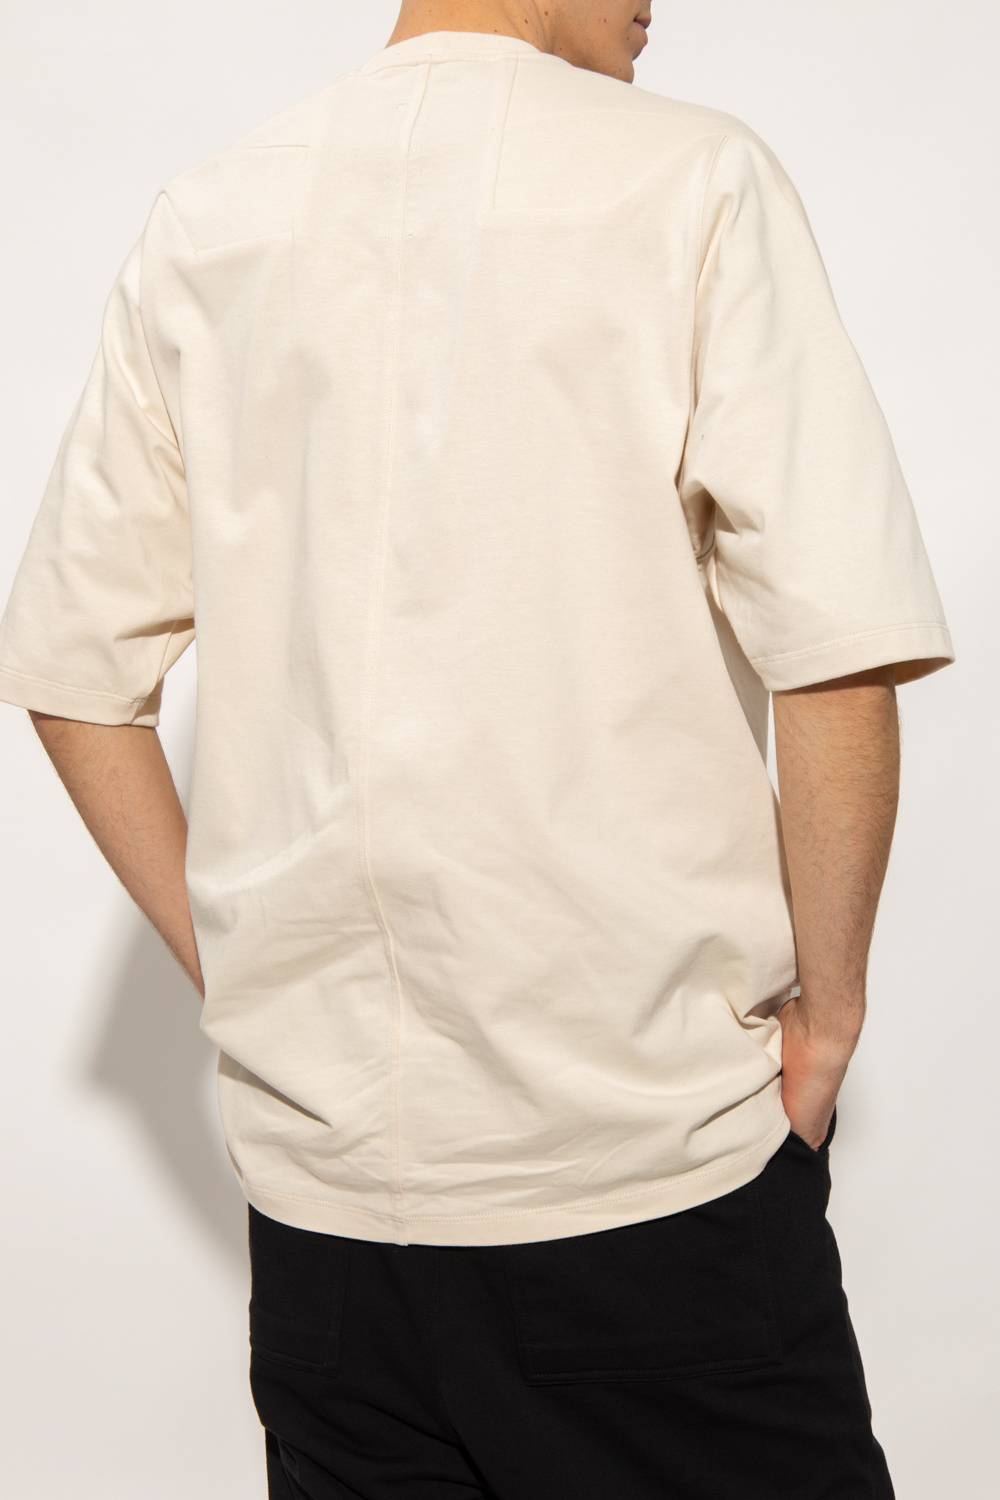 Rick Owens Top-stitched T-shirt